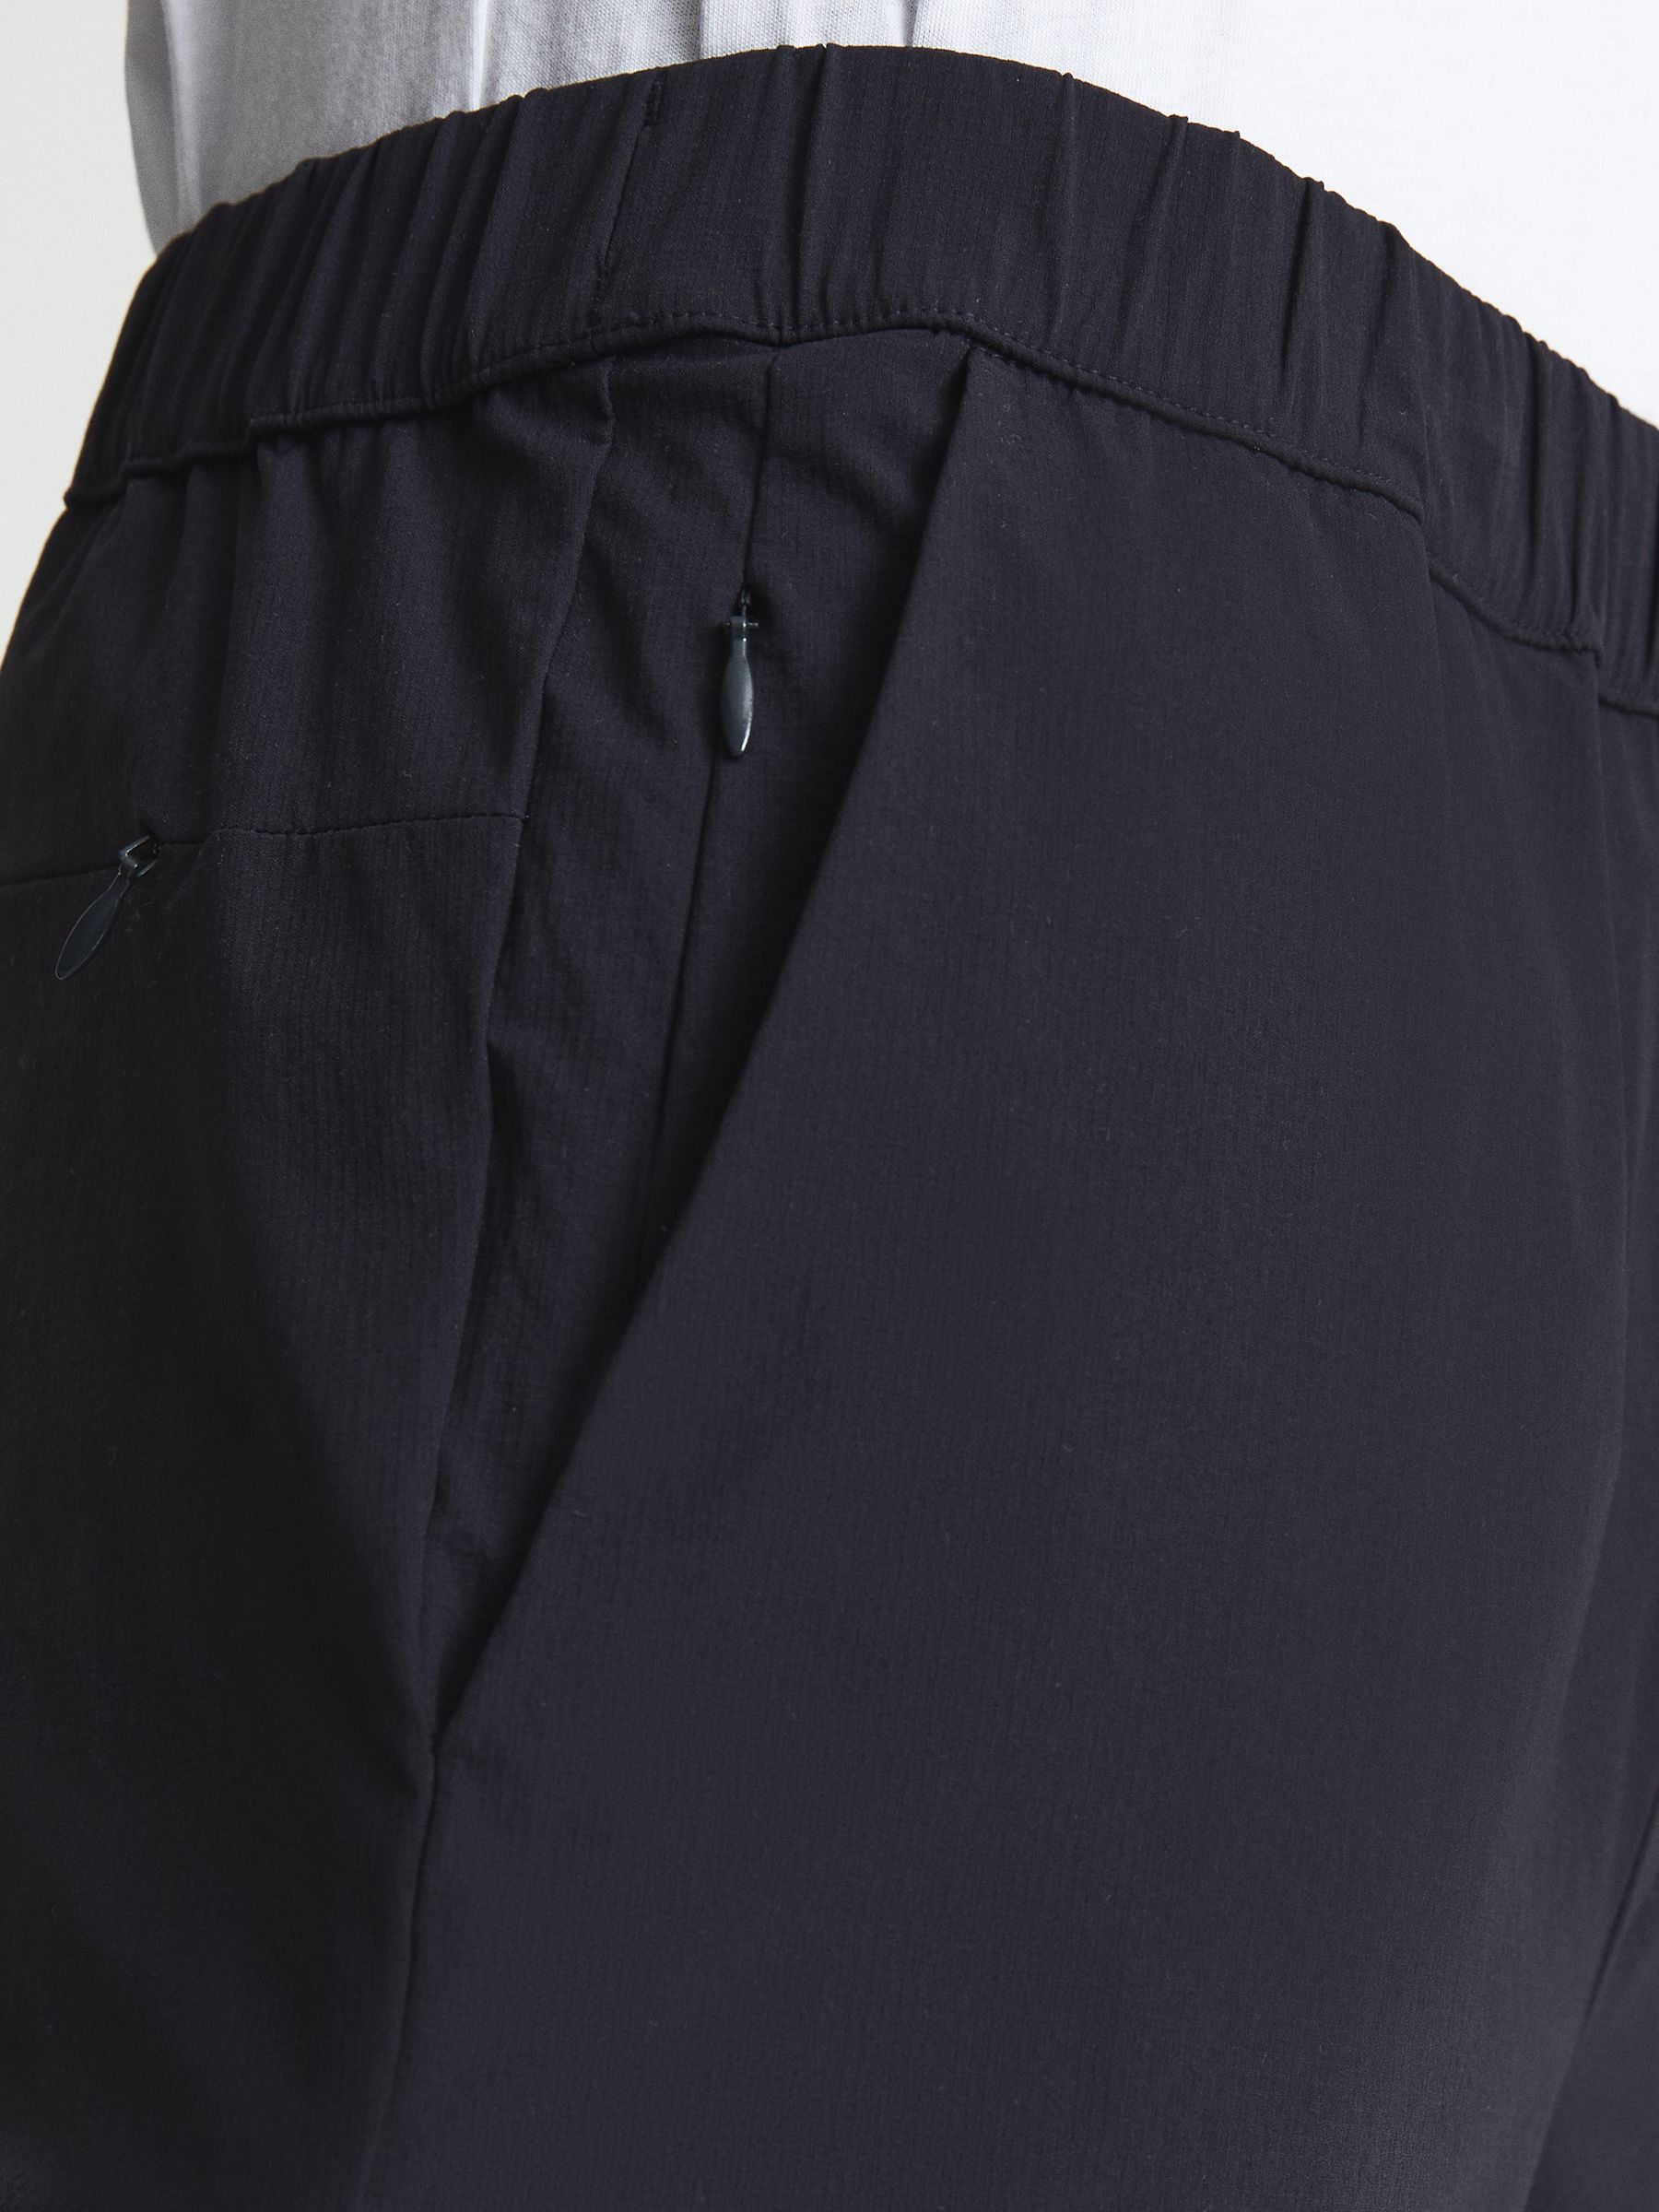 Reiss Nicholas Elasticated Waist Technical Trousers - REISS